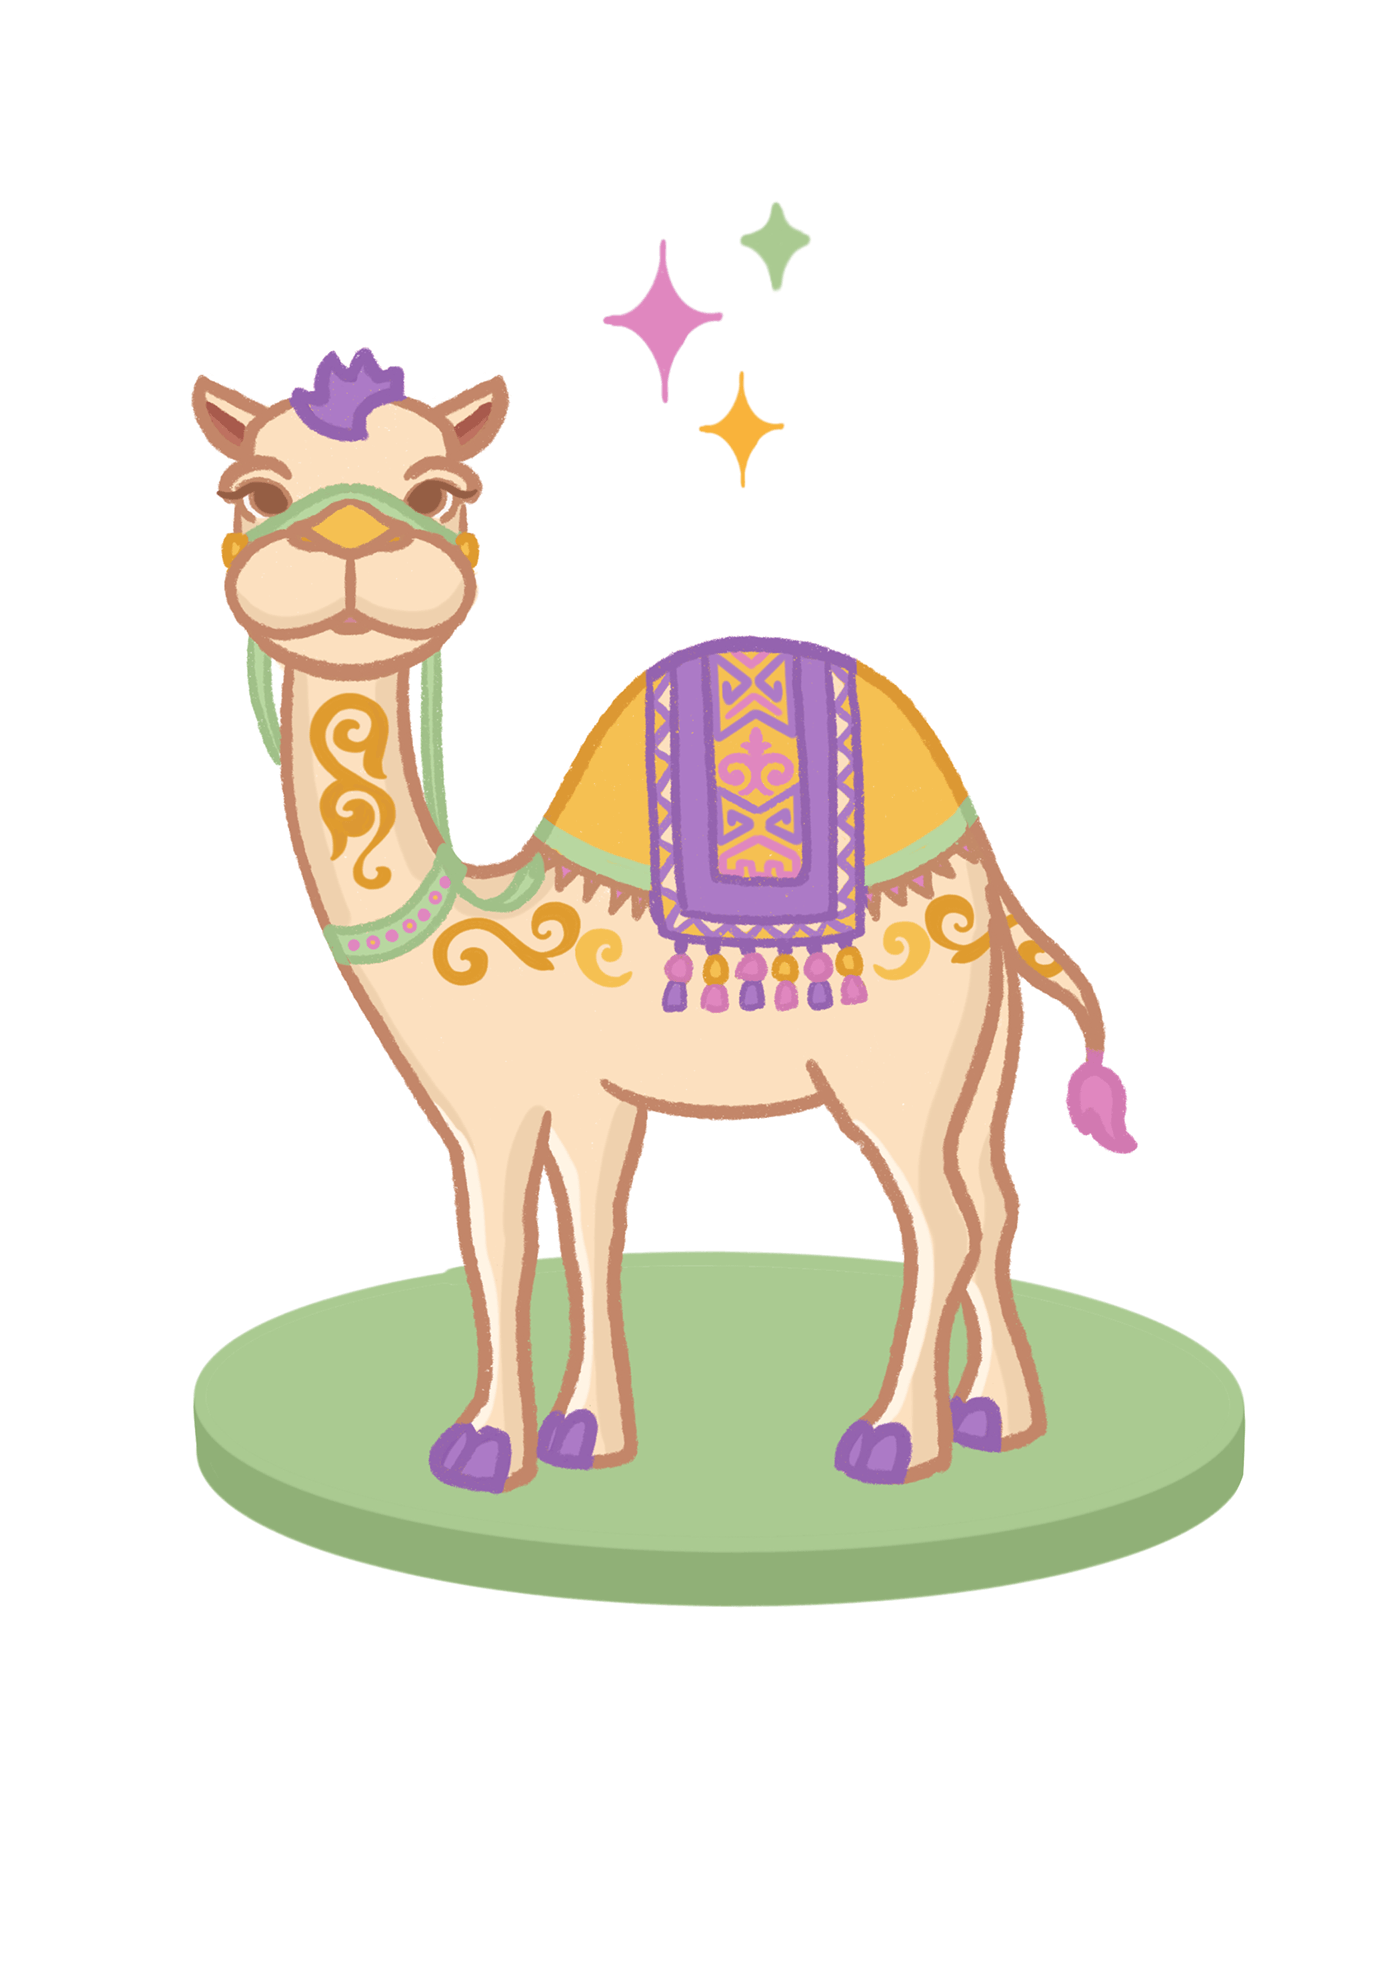 Livestock horse camel sheep childrens illustration book illustration cute illustration ornamental kazakh cow Ethnic cultural